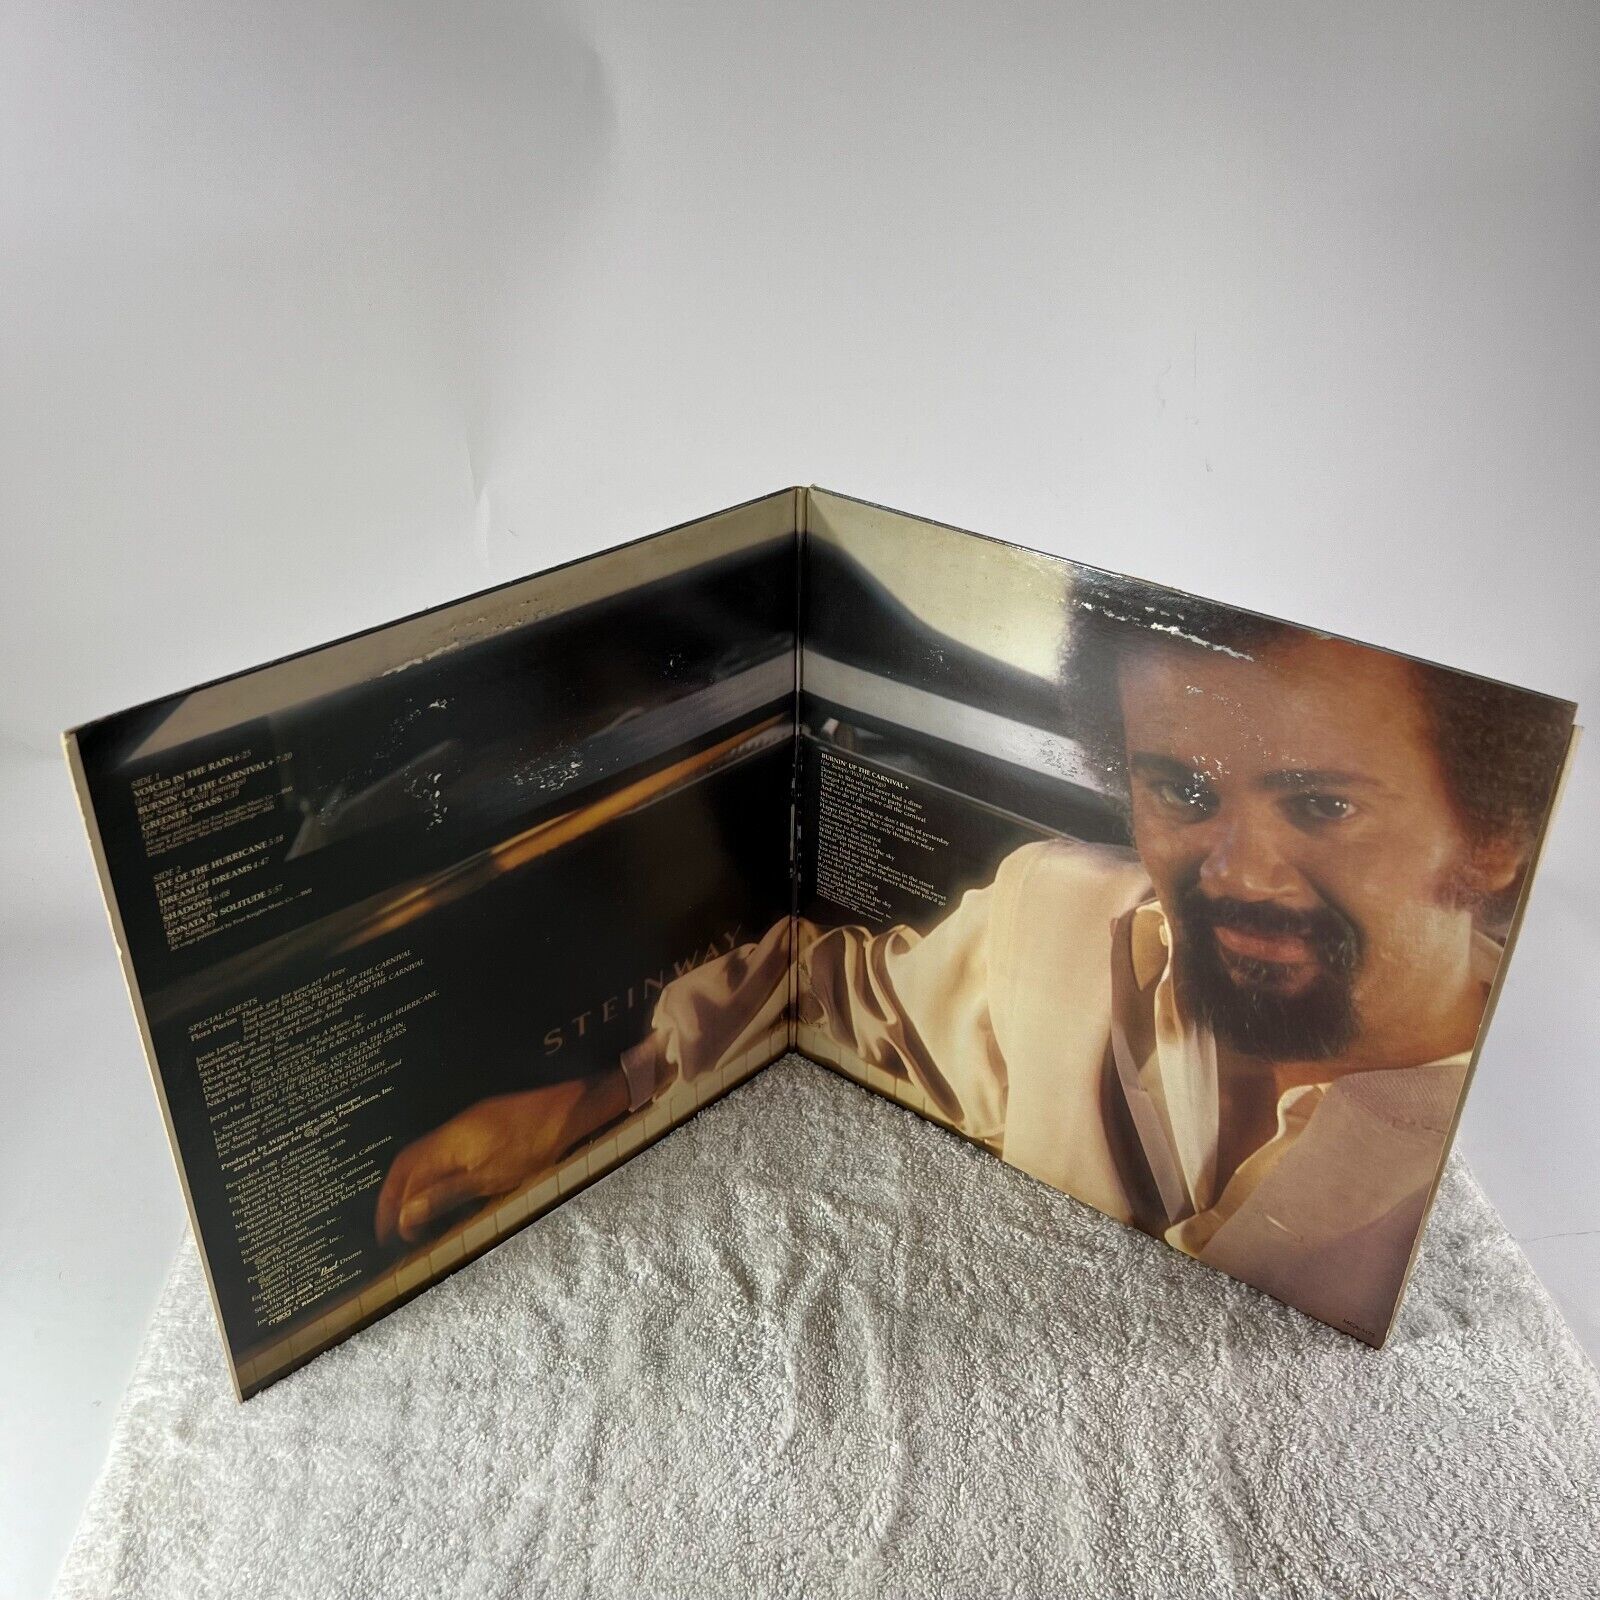 JOE SAMPLE Voices In The Rain Gatefold New Vinyl LP 1981 MCA-5172 l